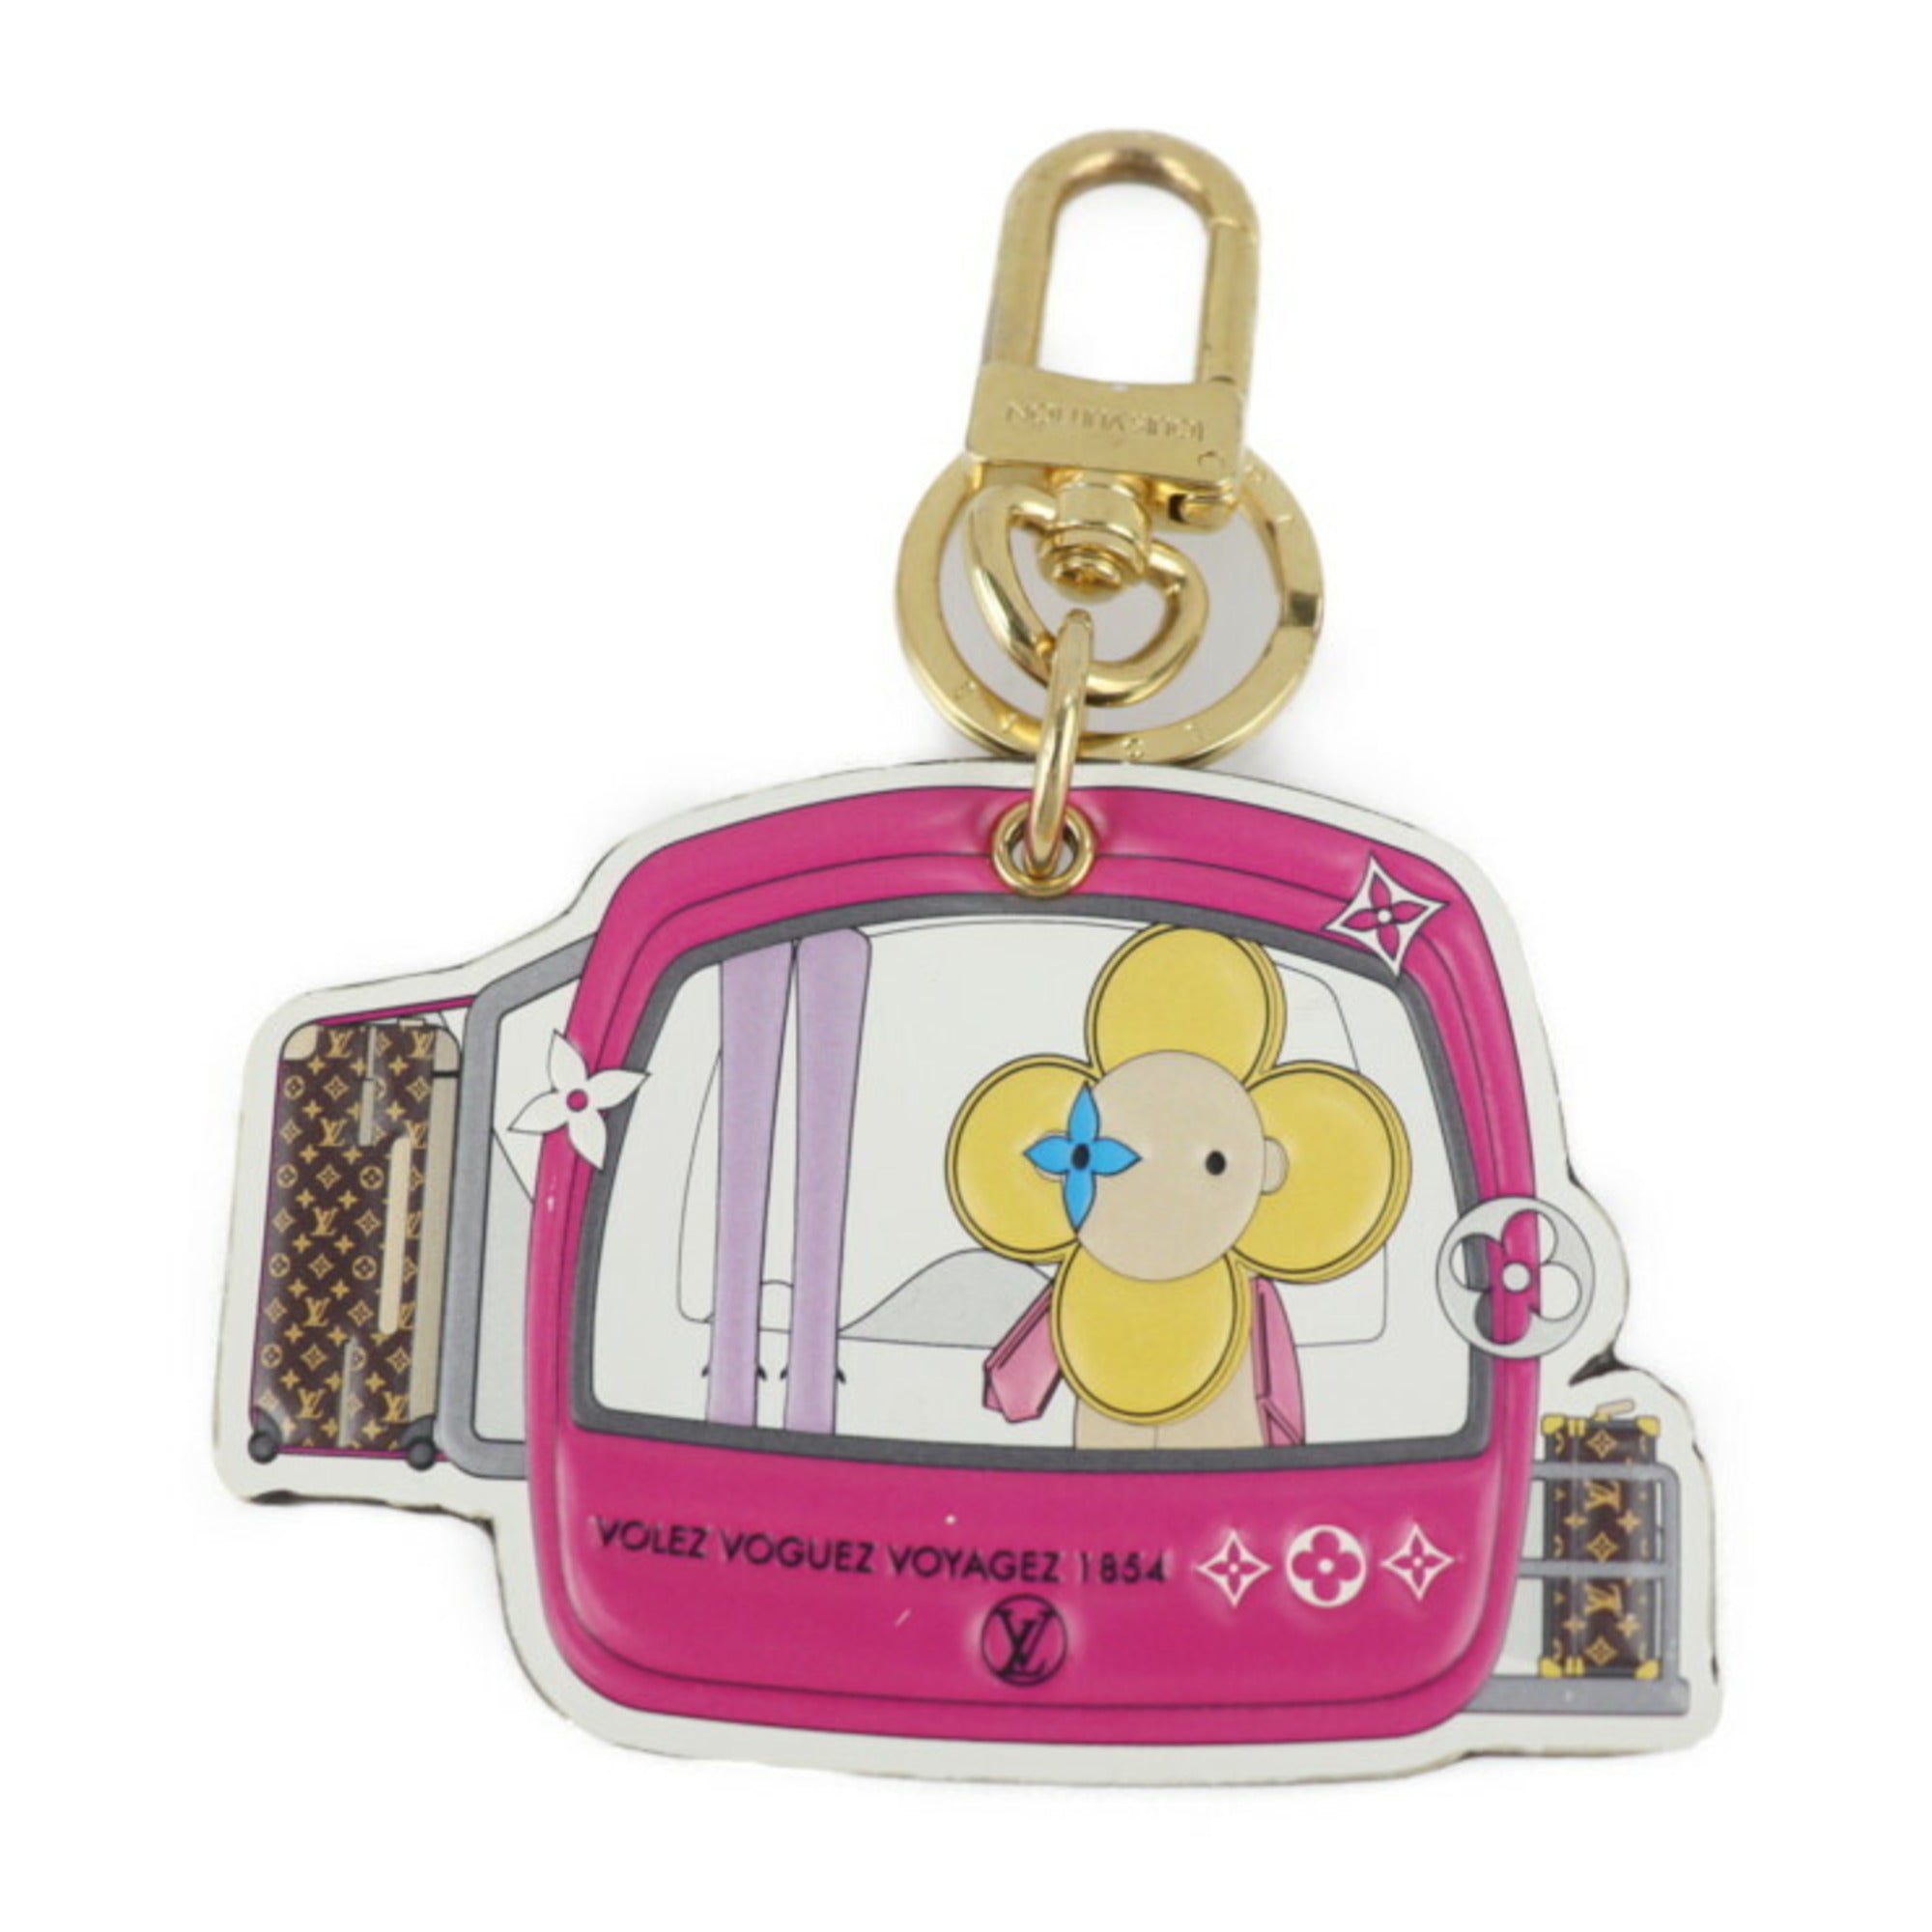 Louis Vuitton Portocre Epi Vivienne Keychain M68653 Monogram Canvas Brown Pink Multicolor Gold Hardware Key Ring Bag Charm